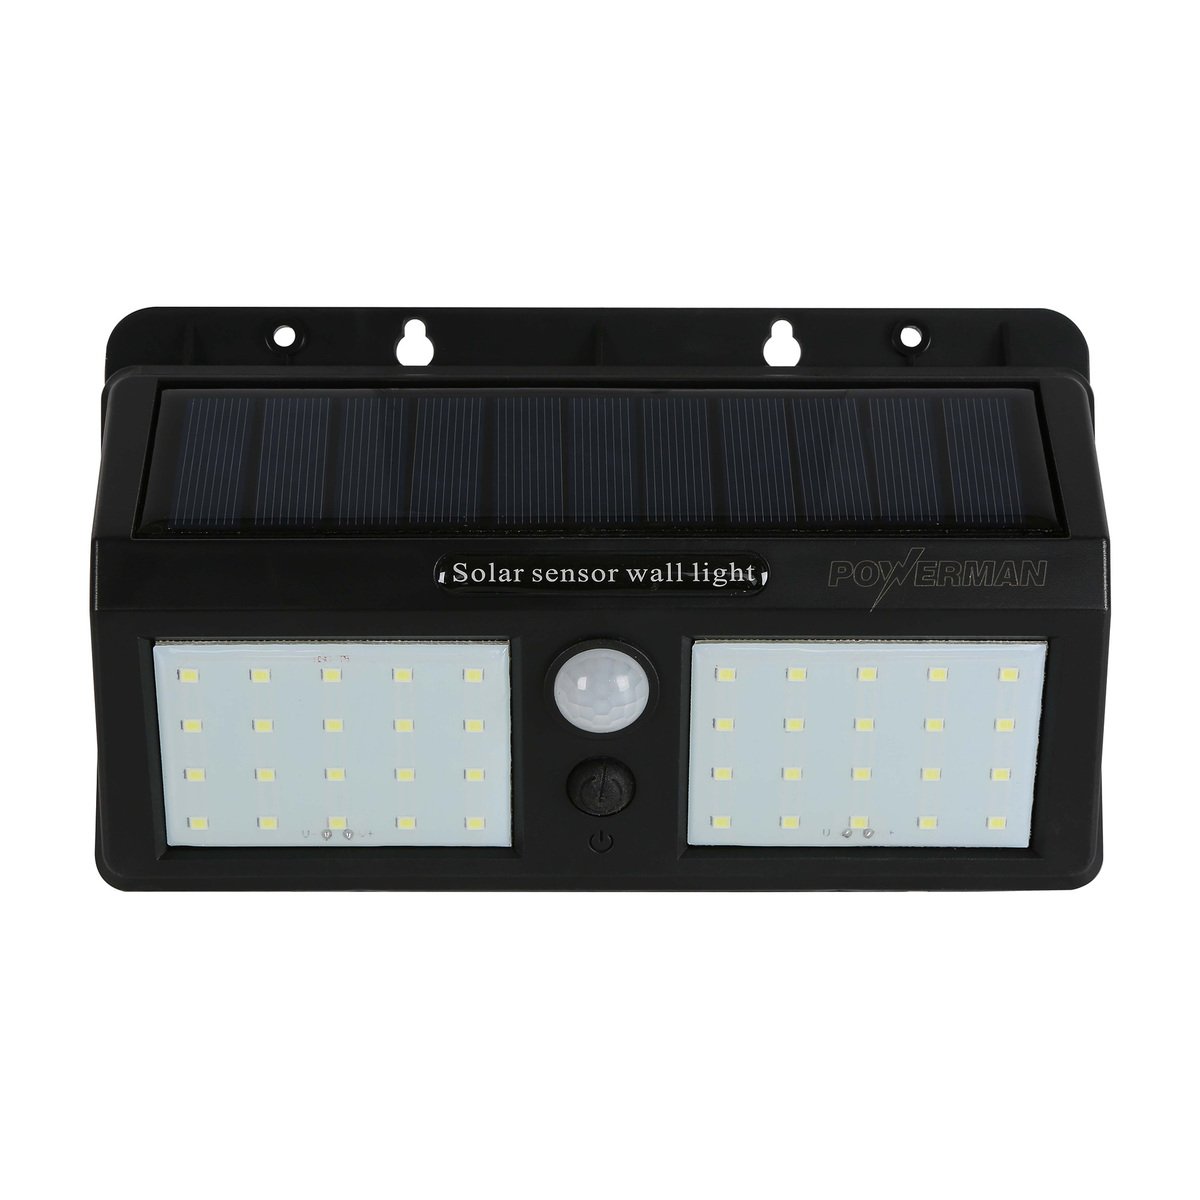 Powerman Solar LED Wall Light KSW-802